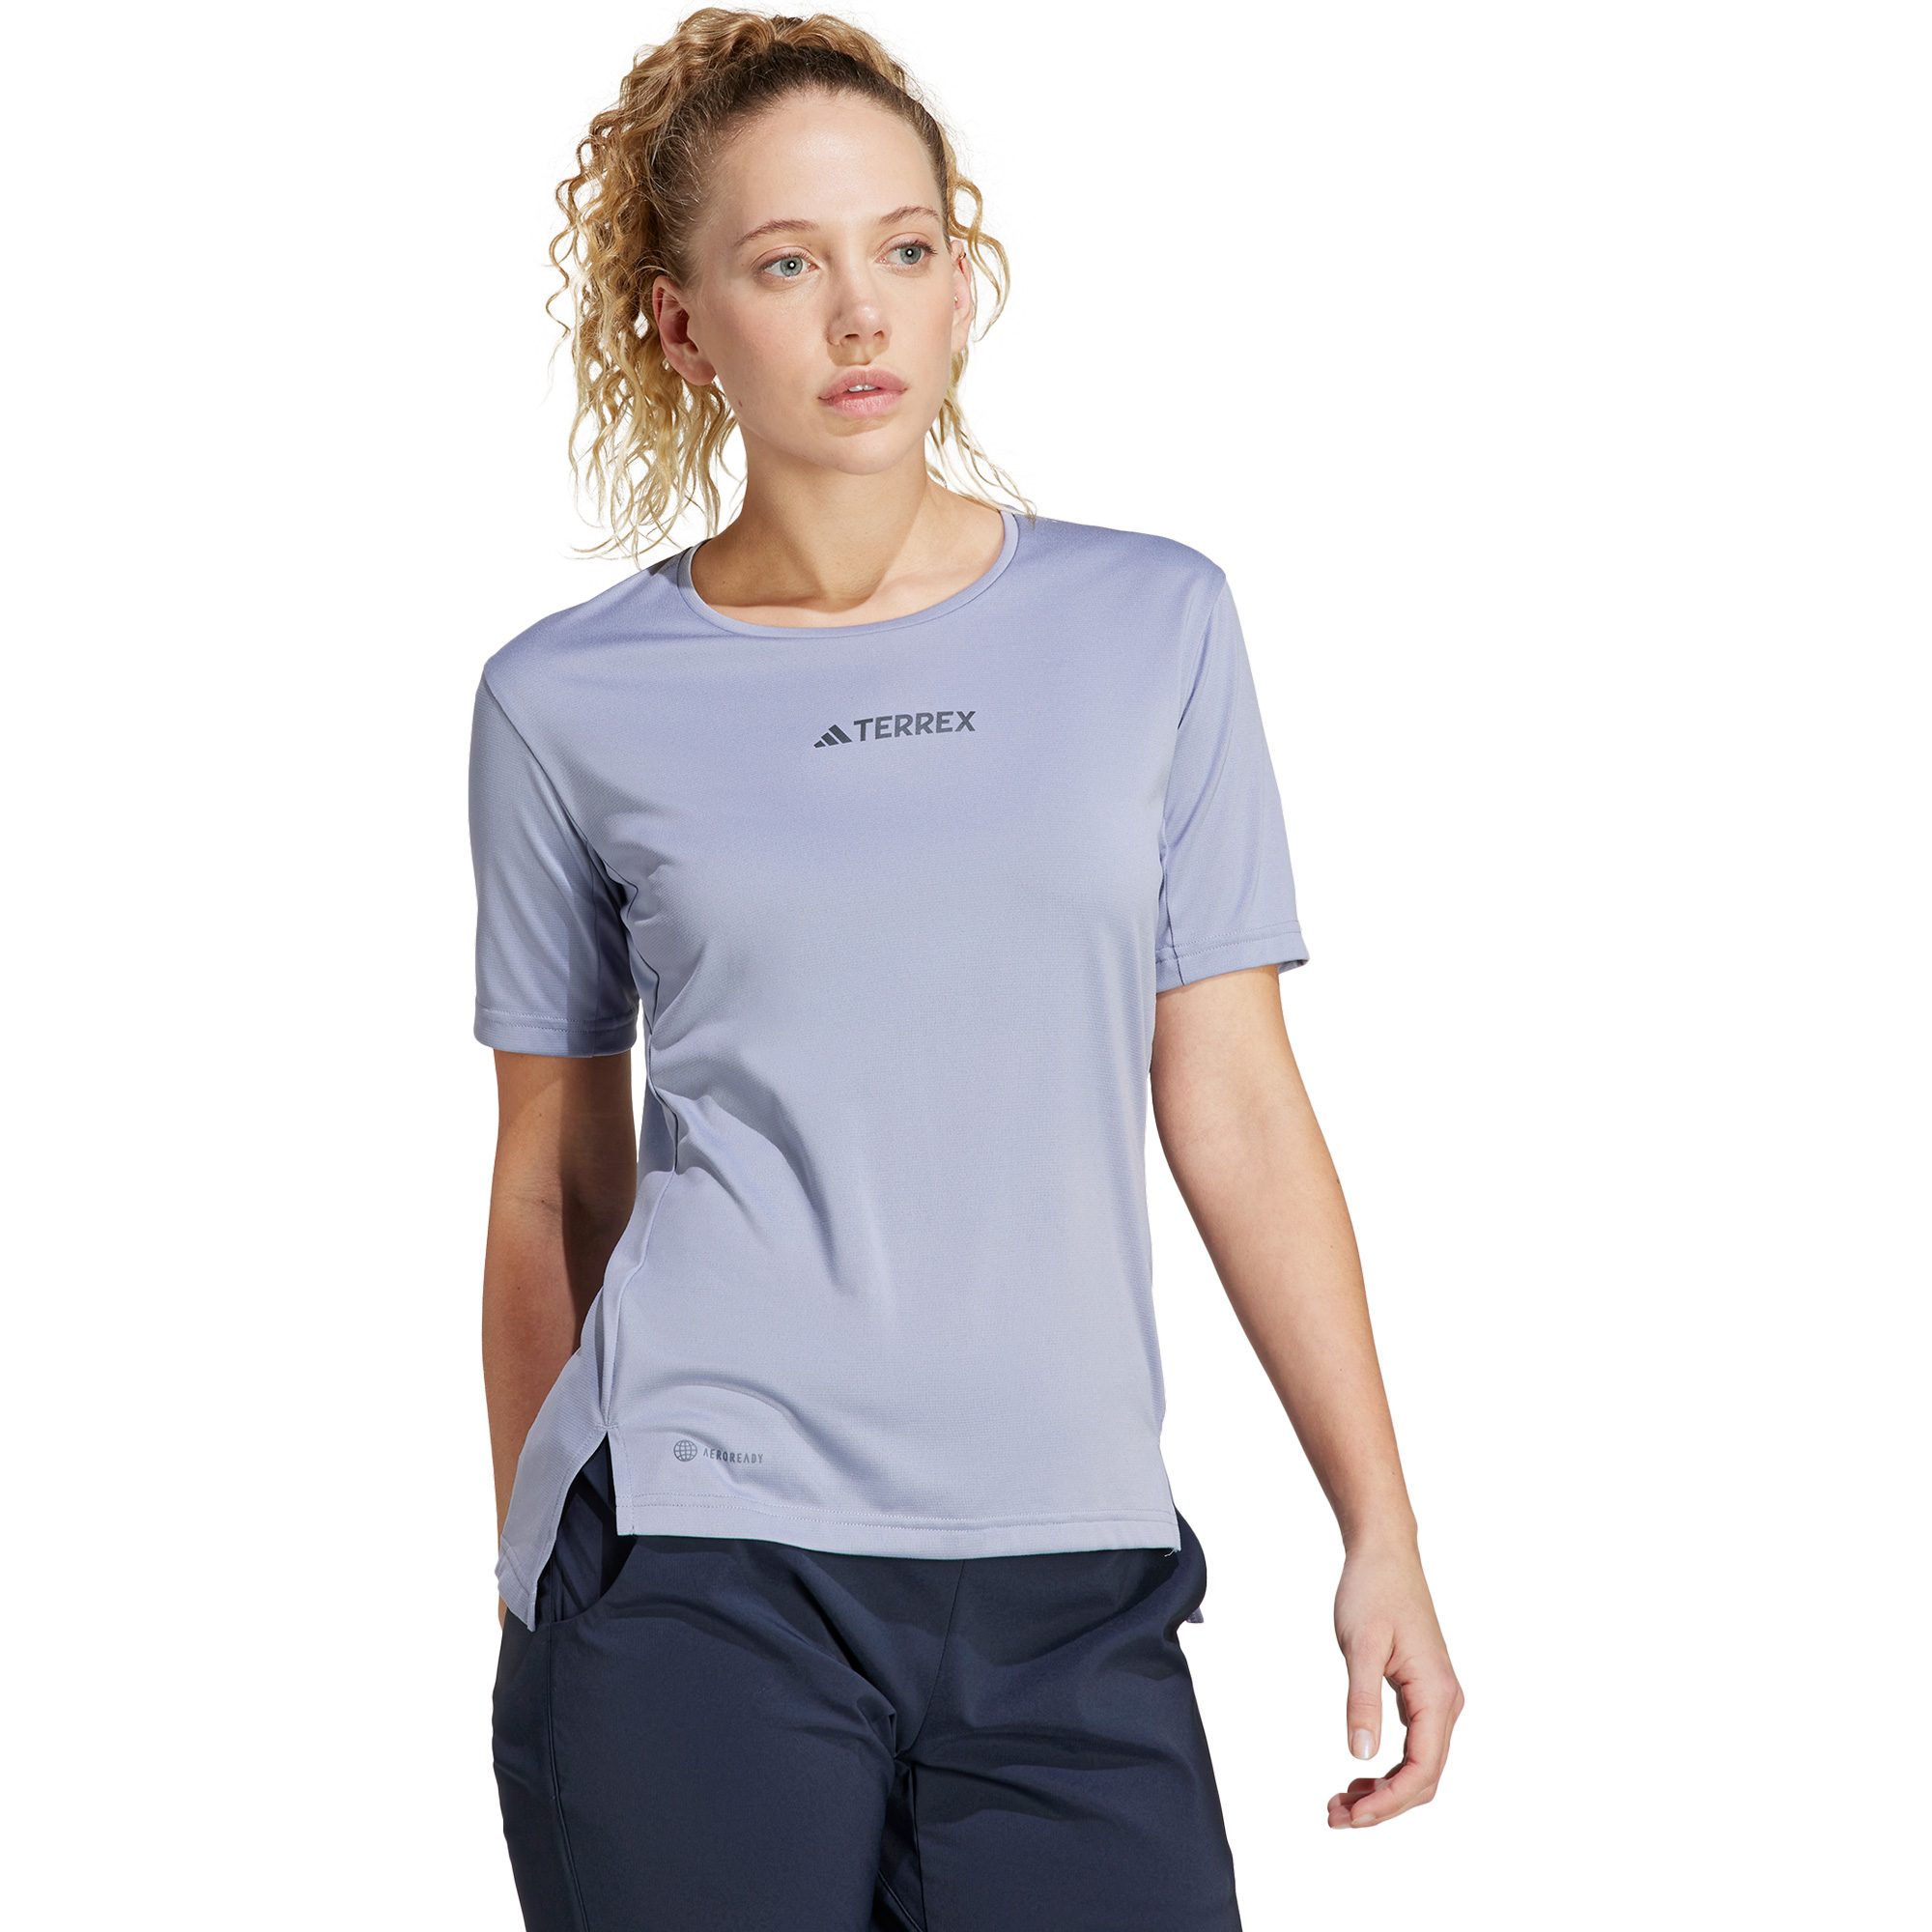 Terrex Sport violet silver T-Shirt Bittl - TERREX at Shop Women adidas Multi